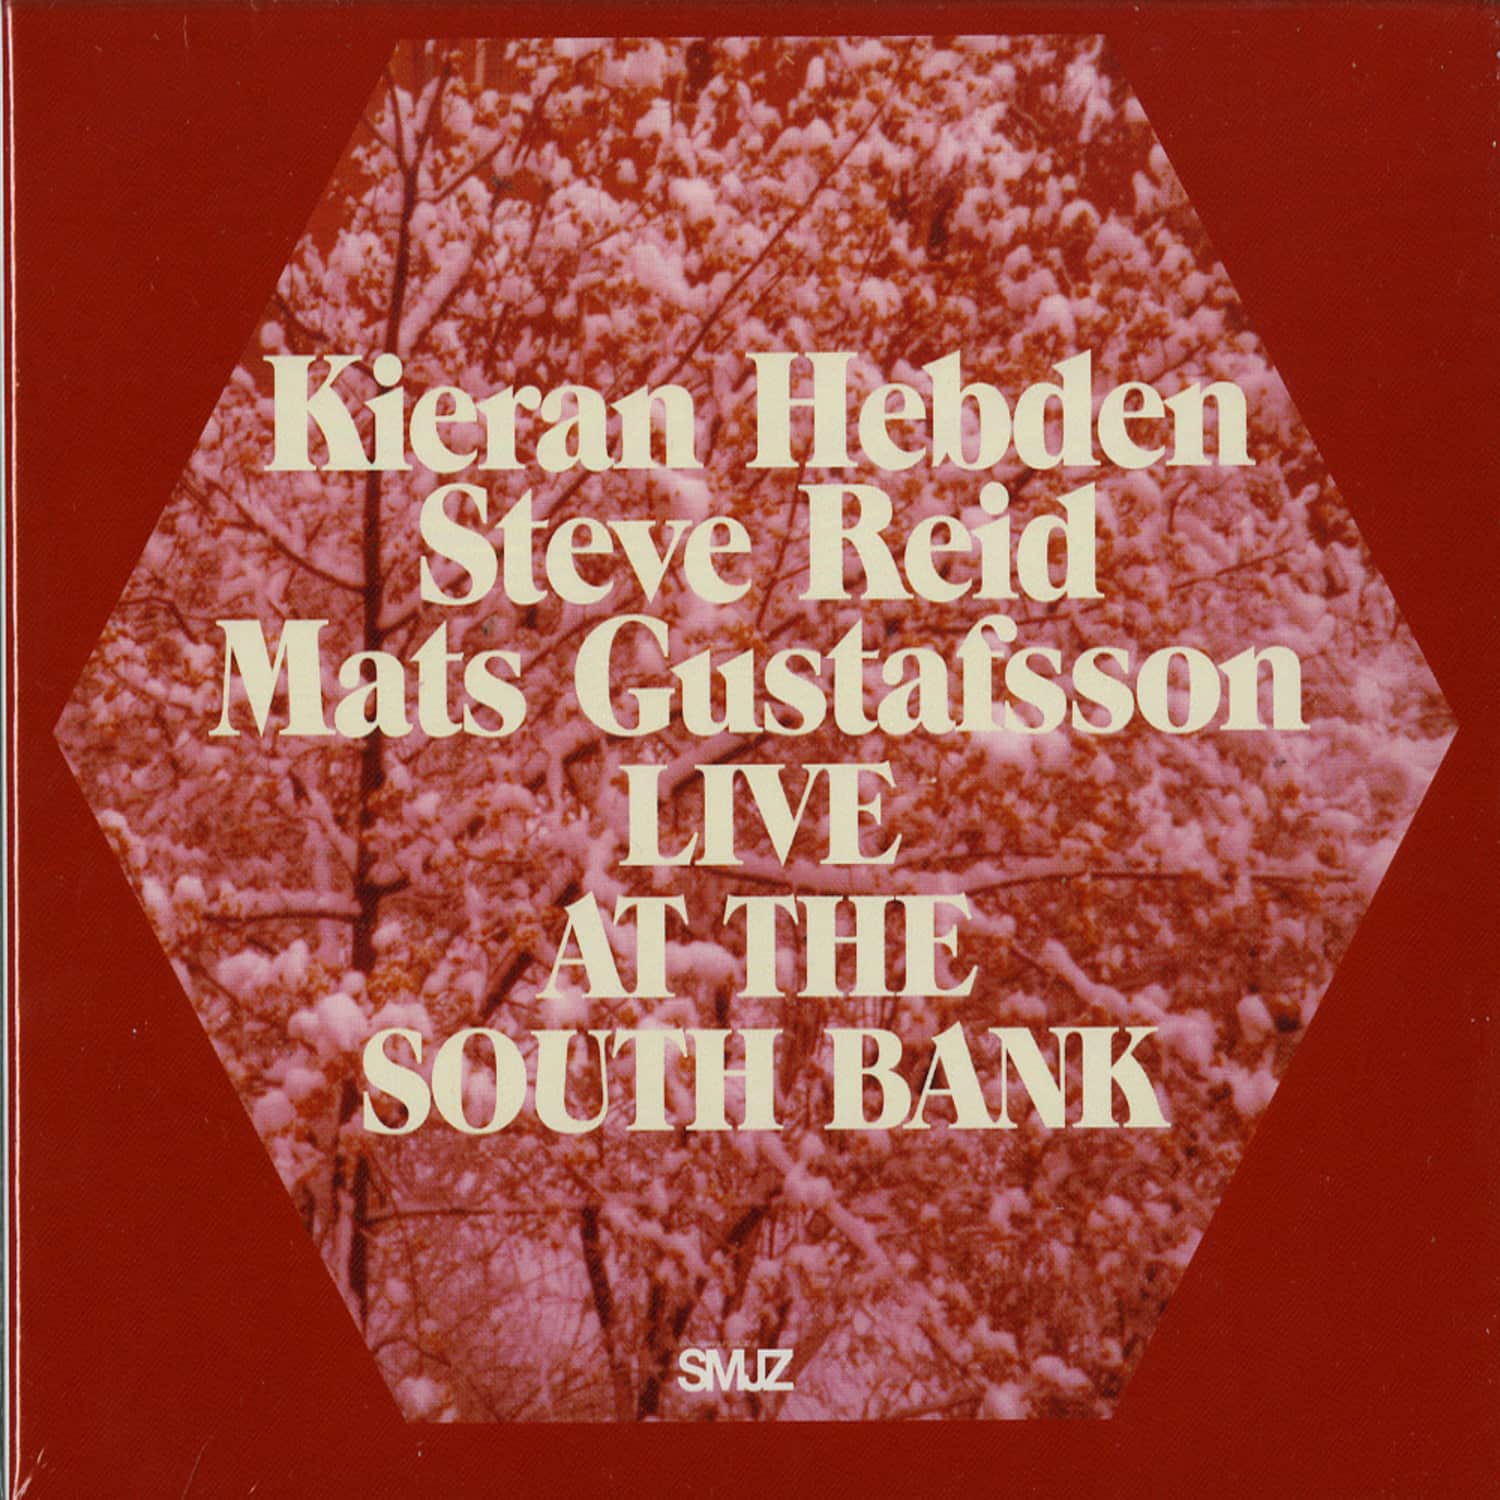 Kieran Hebden / Steve Reid / Mats Gustafsson - LIVE AT THE SOUTH BANK 